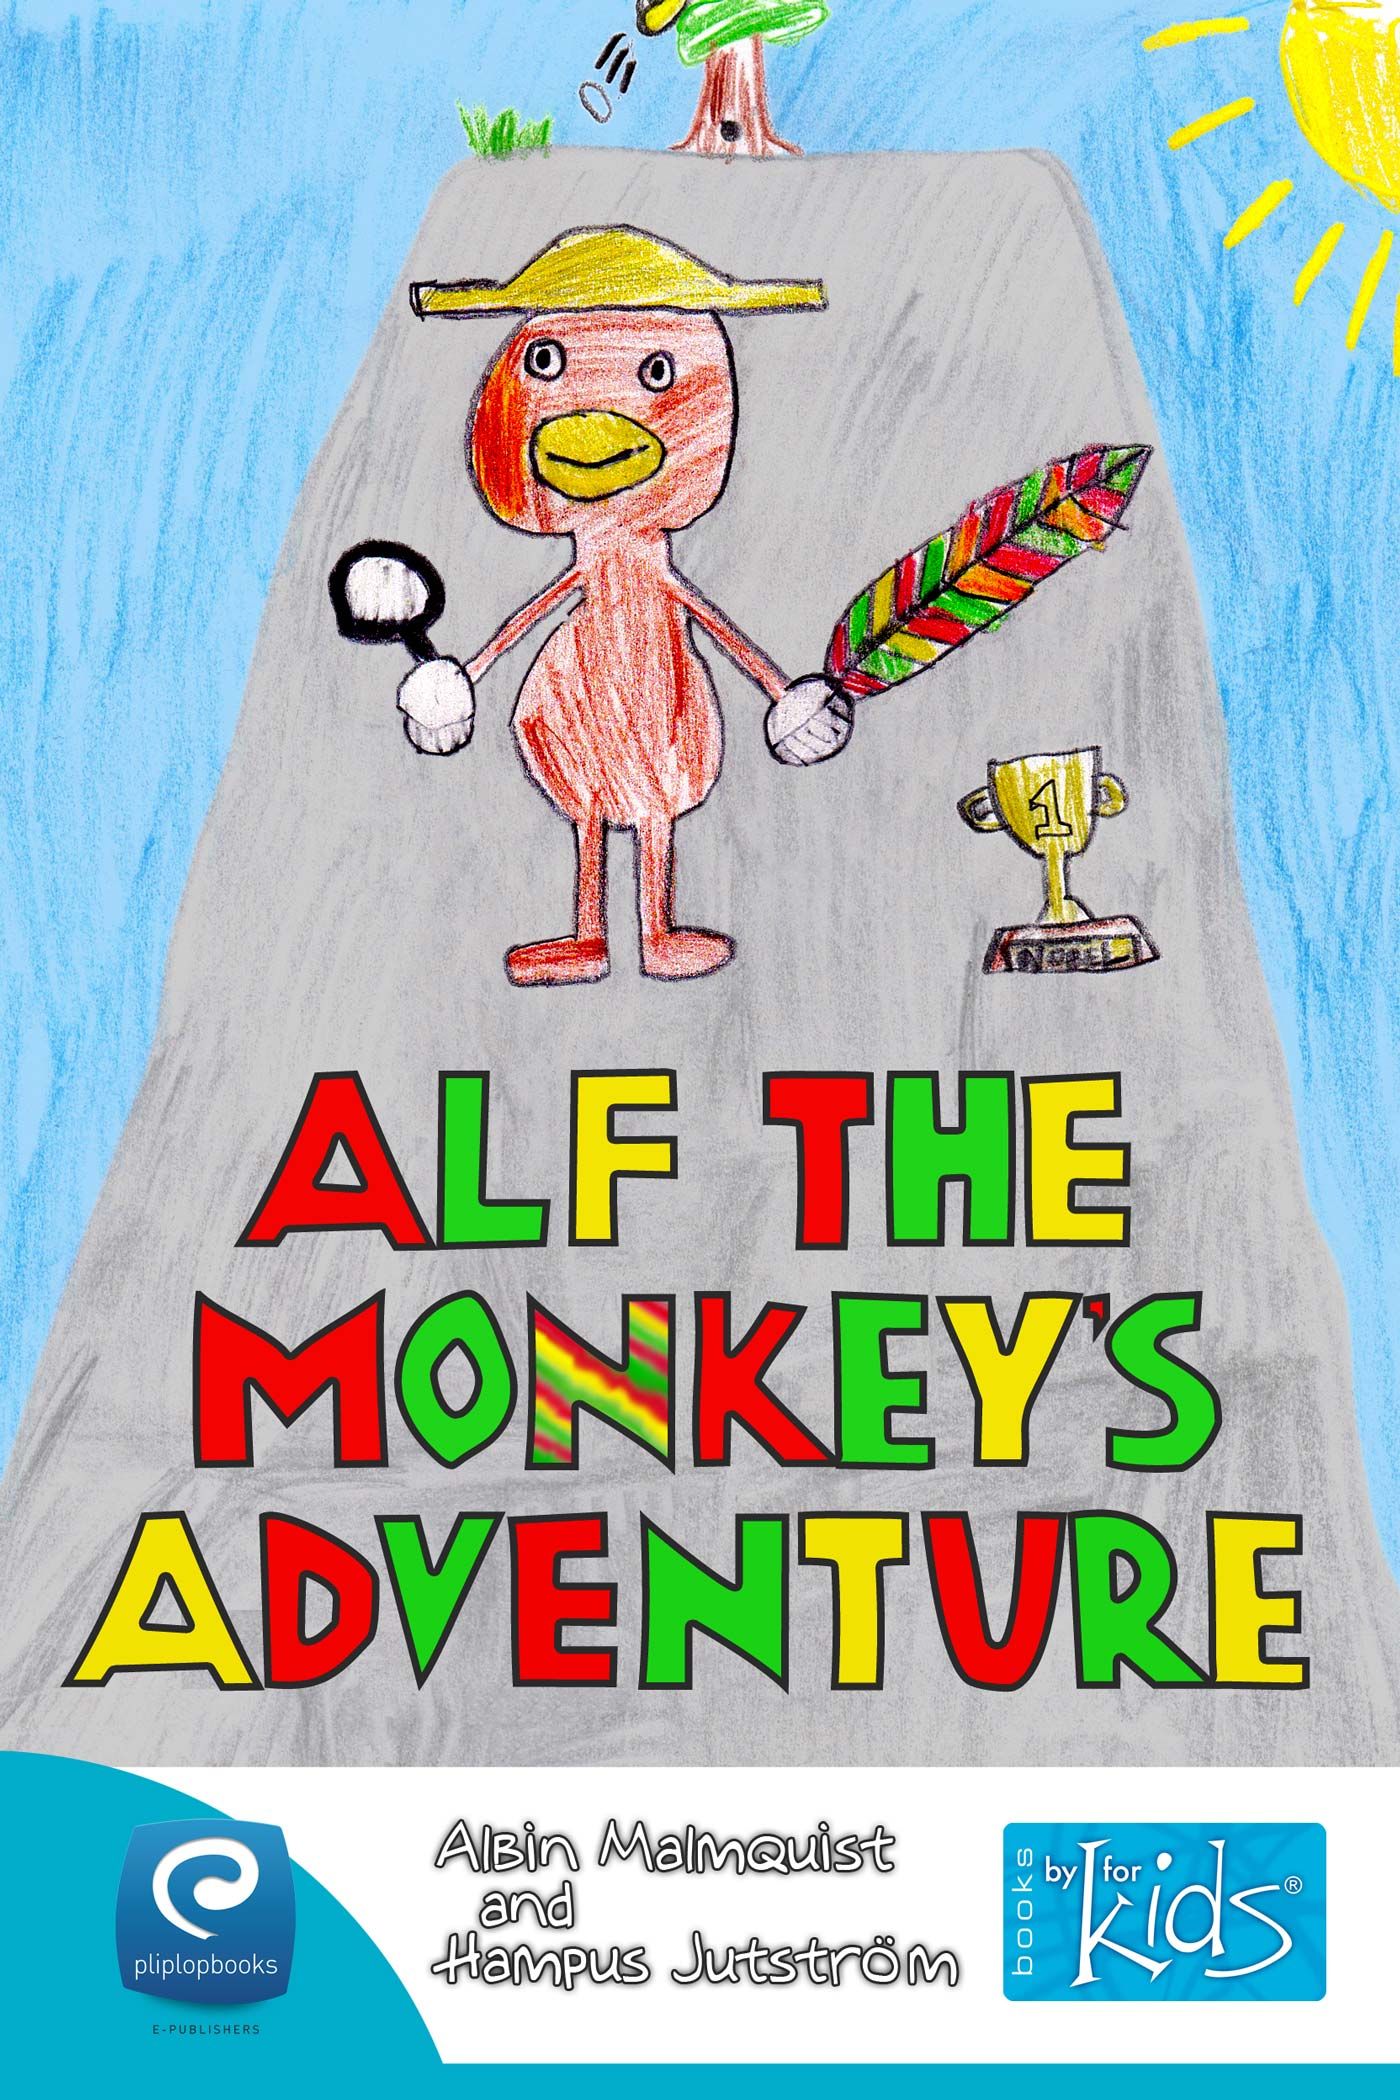 Alf the monkey's adventure, e-bog af Hampus Jutström, Albin Malmquist